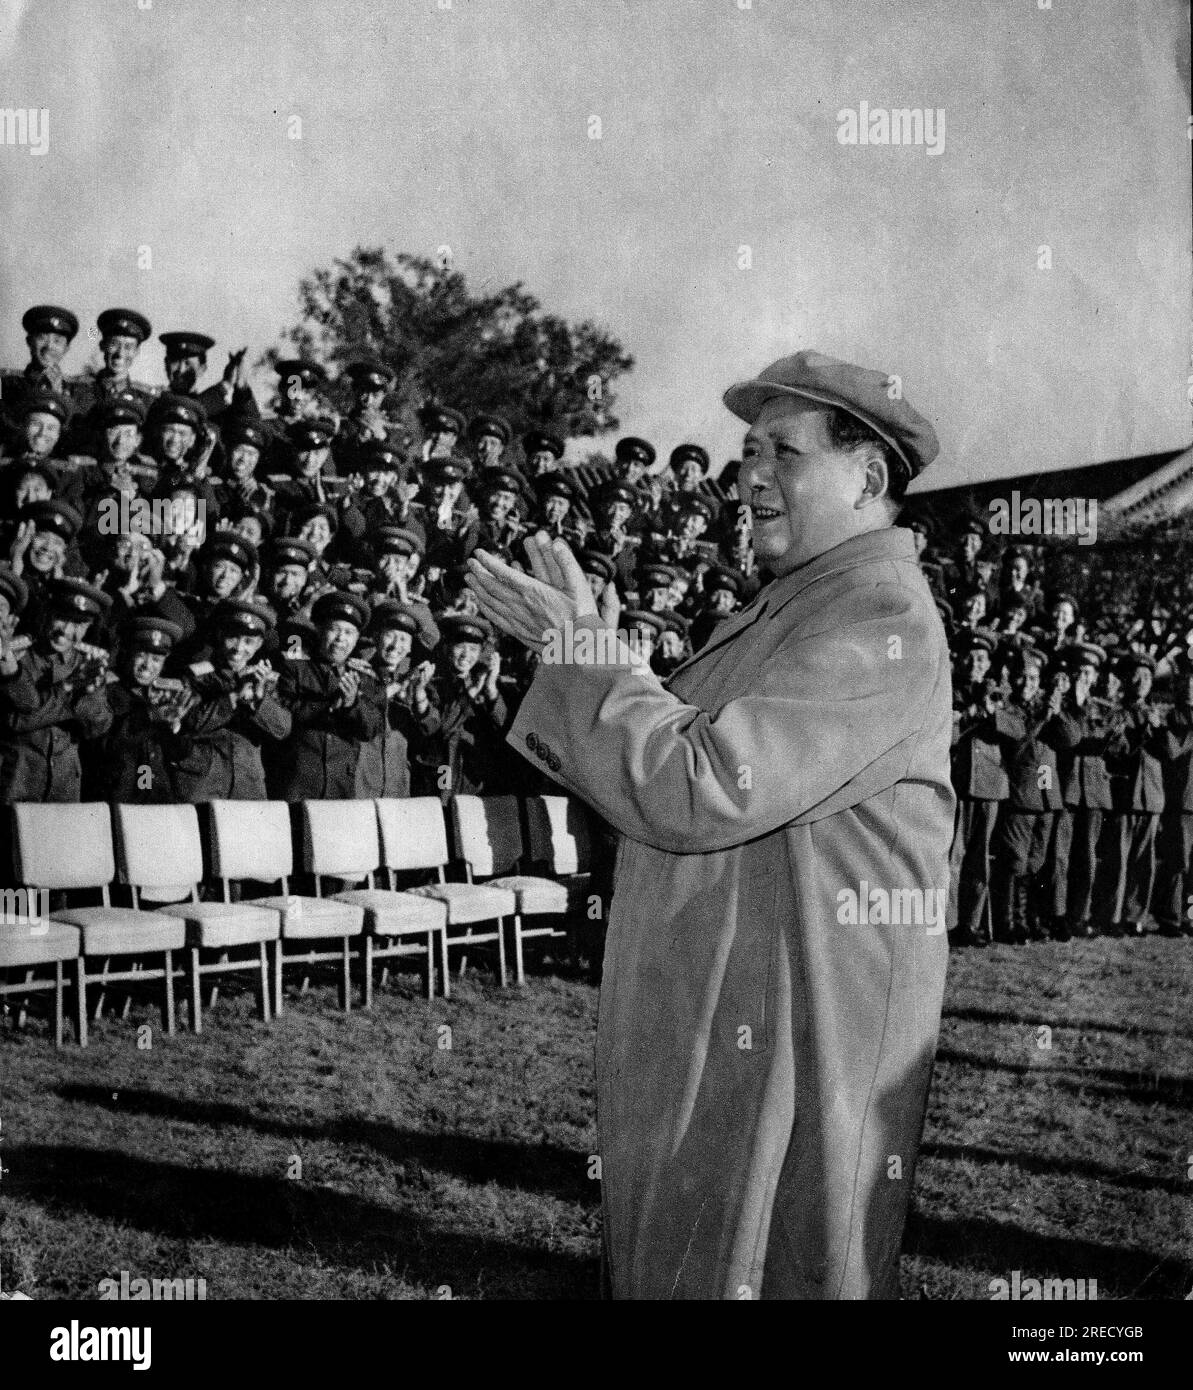 Visite du President Mao aux troupes Nord Coreennes, en 1950, in 'La Guerre de Coree', Chine, 1959 (The Chinese president Mao visiting the troops in North Korea, from 'Korean War', China, 1959) Stock Photo